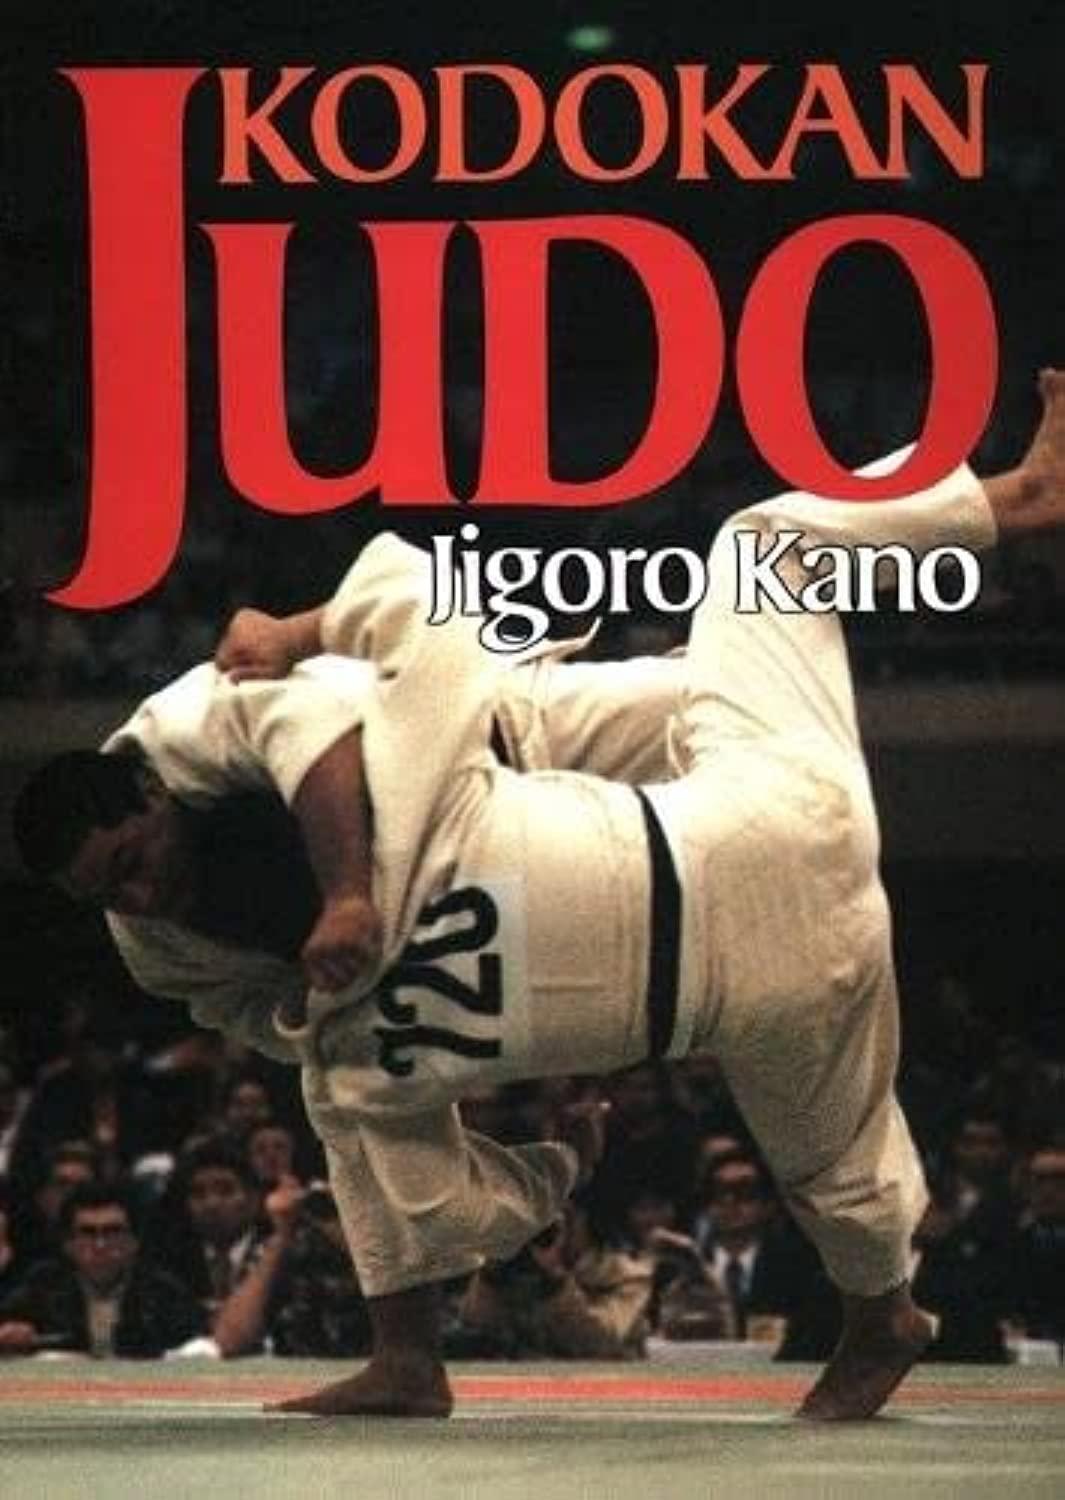 Kodokan Judo Book by Jigoro Kano